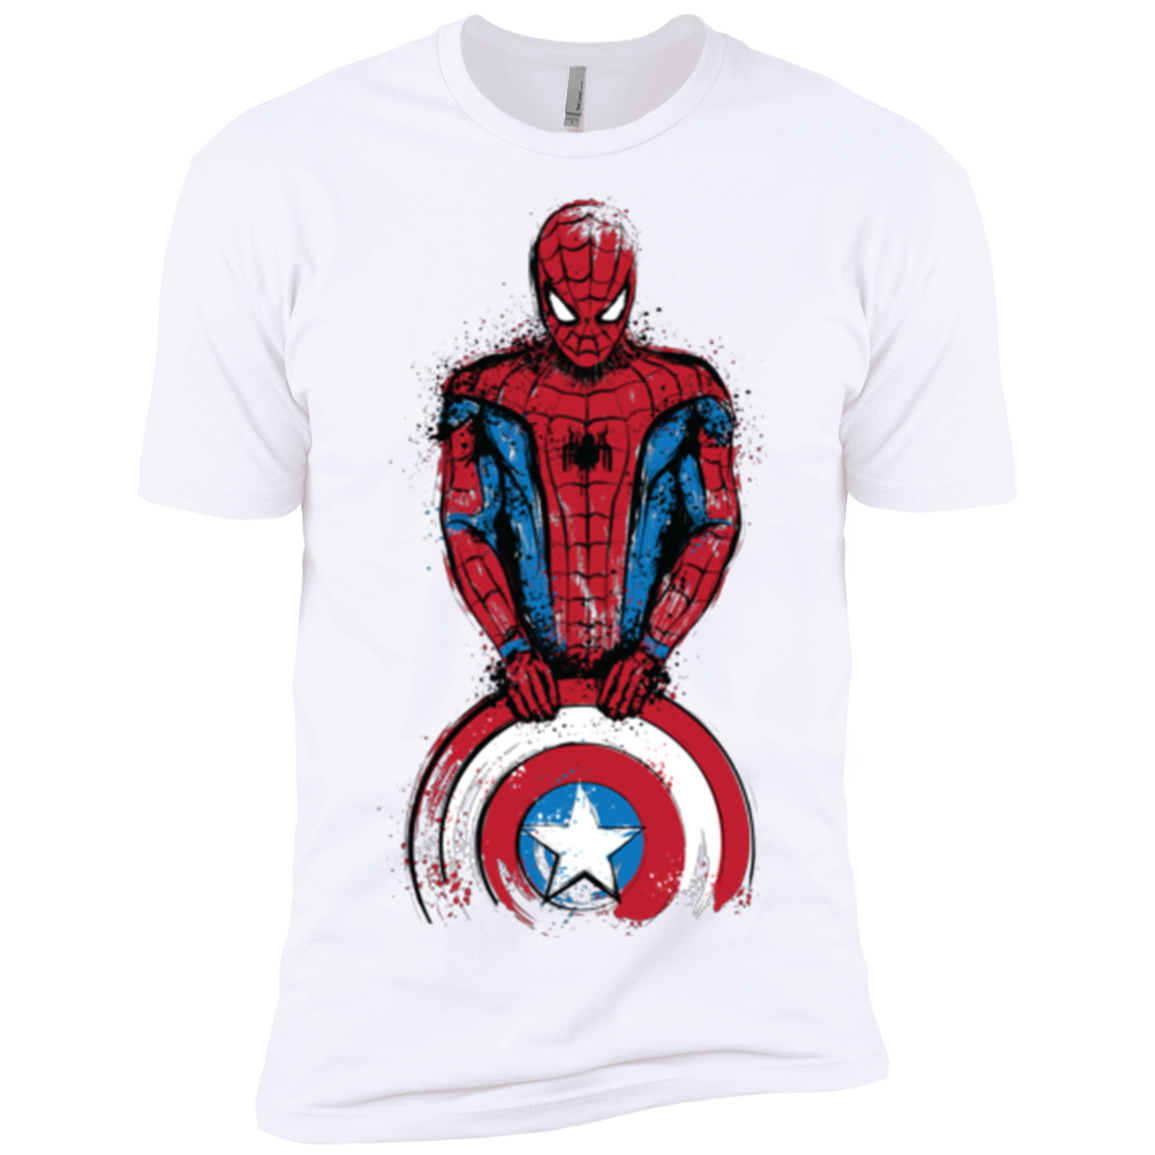 The Spider is Coming Men's Premium T-Shirt